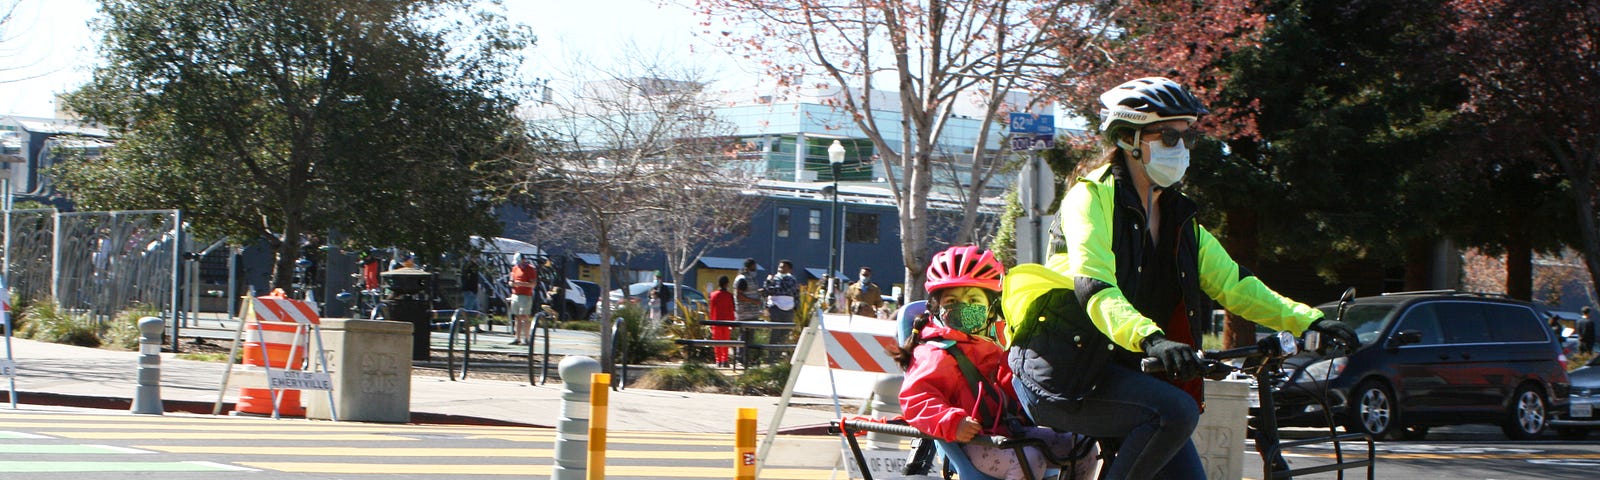 Jennifer and Alexandra Jong ride a cargo bike down the new separated bike lanes on Doyle Street